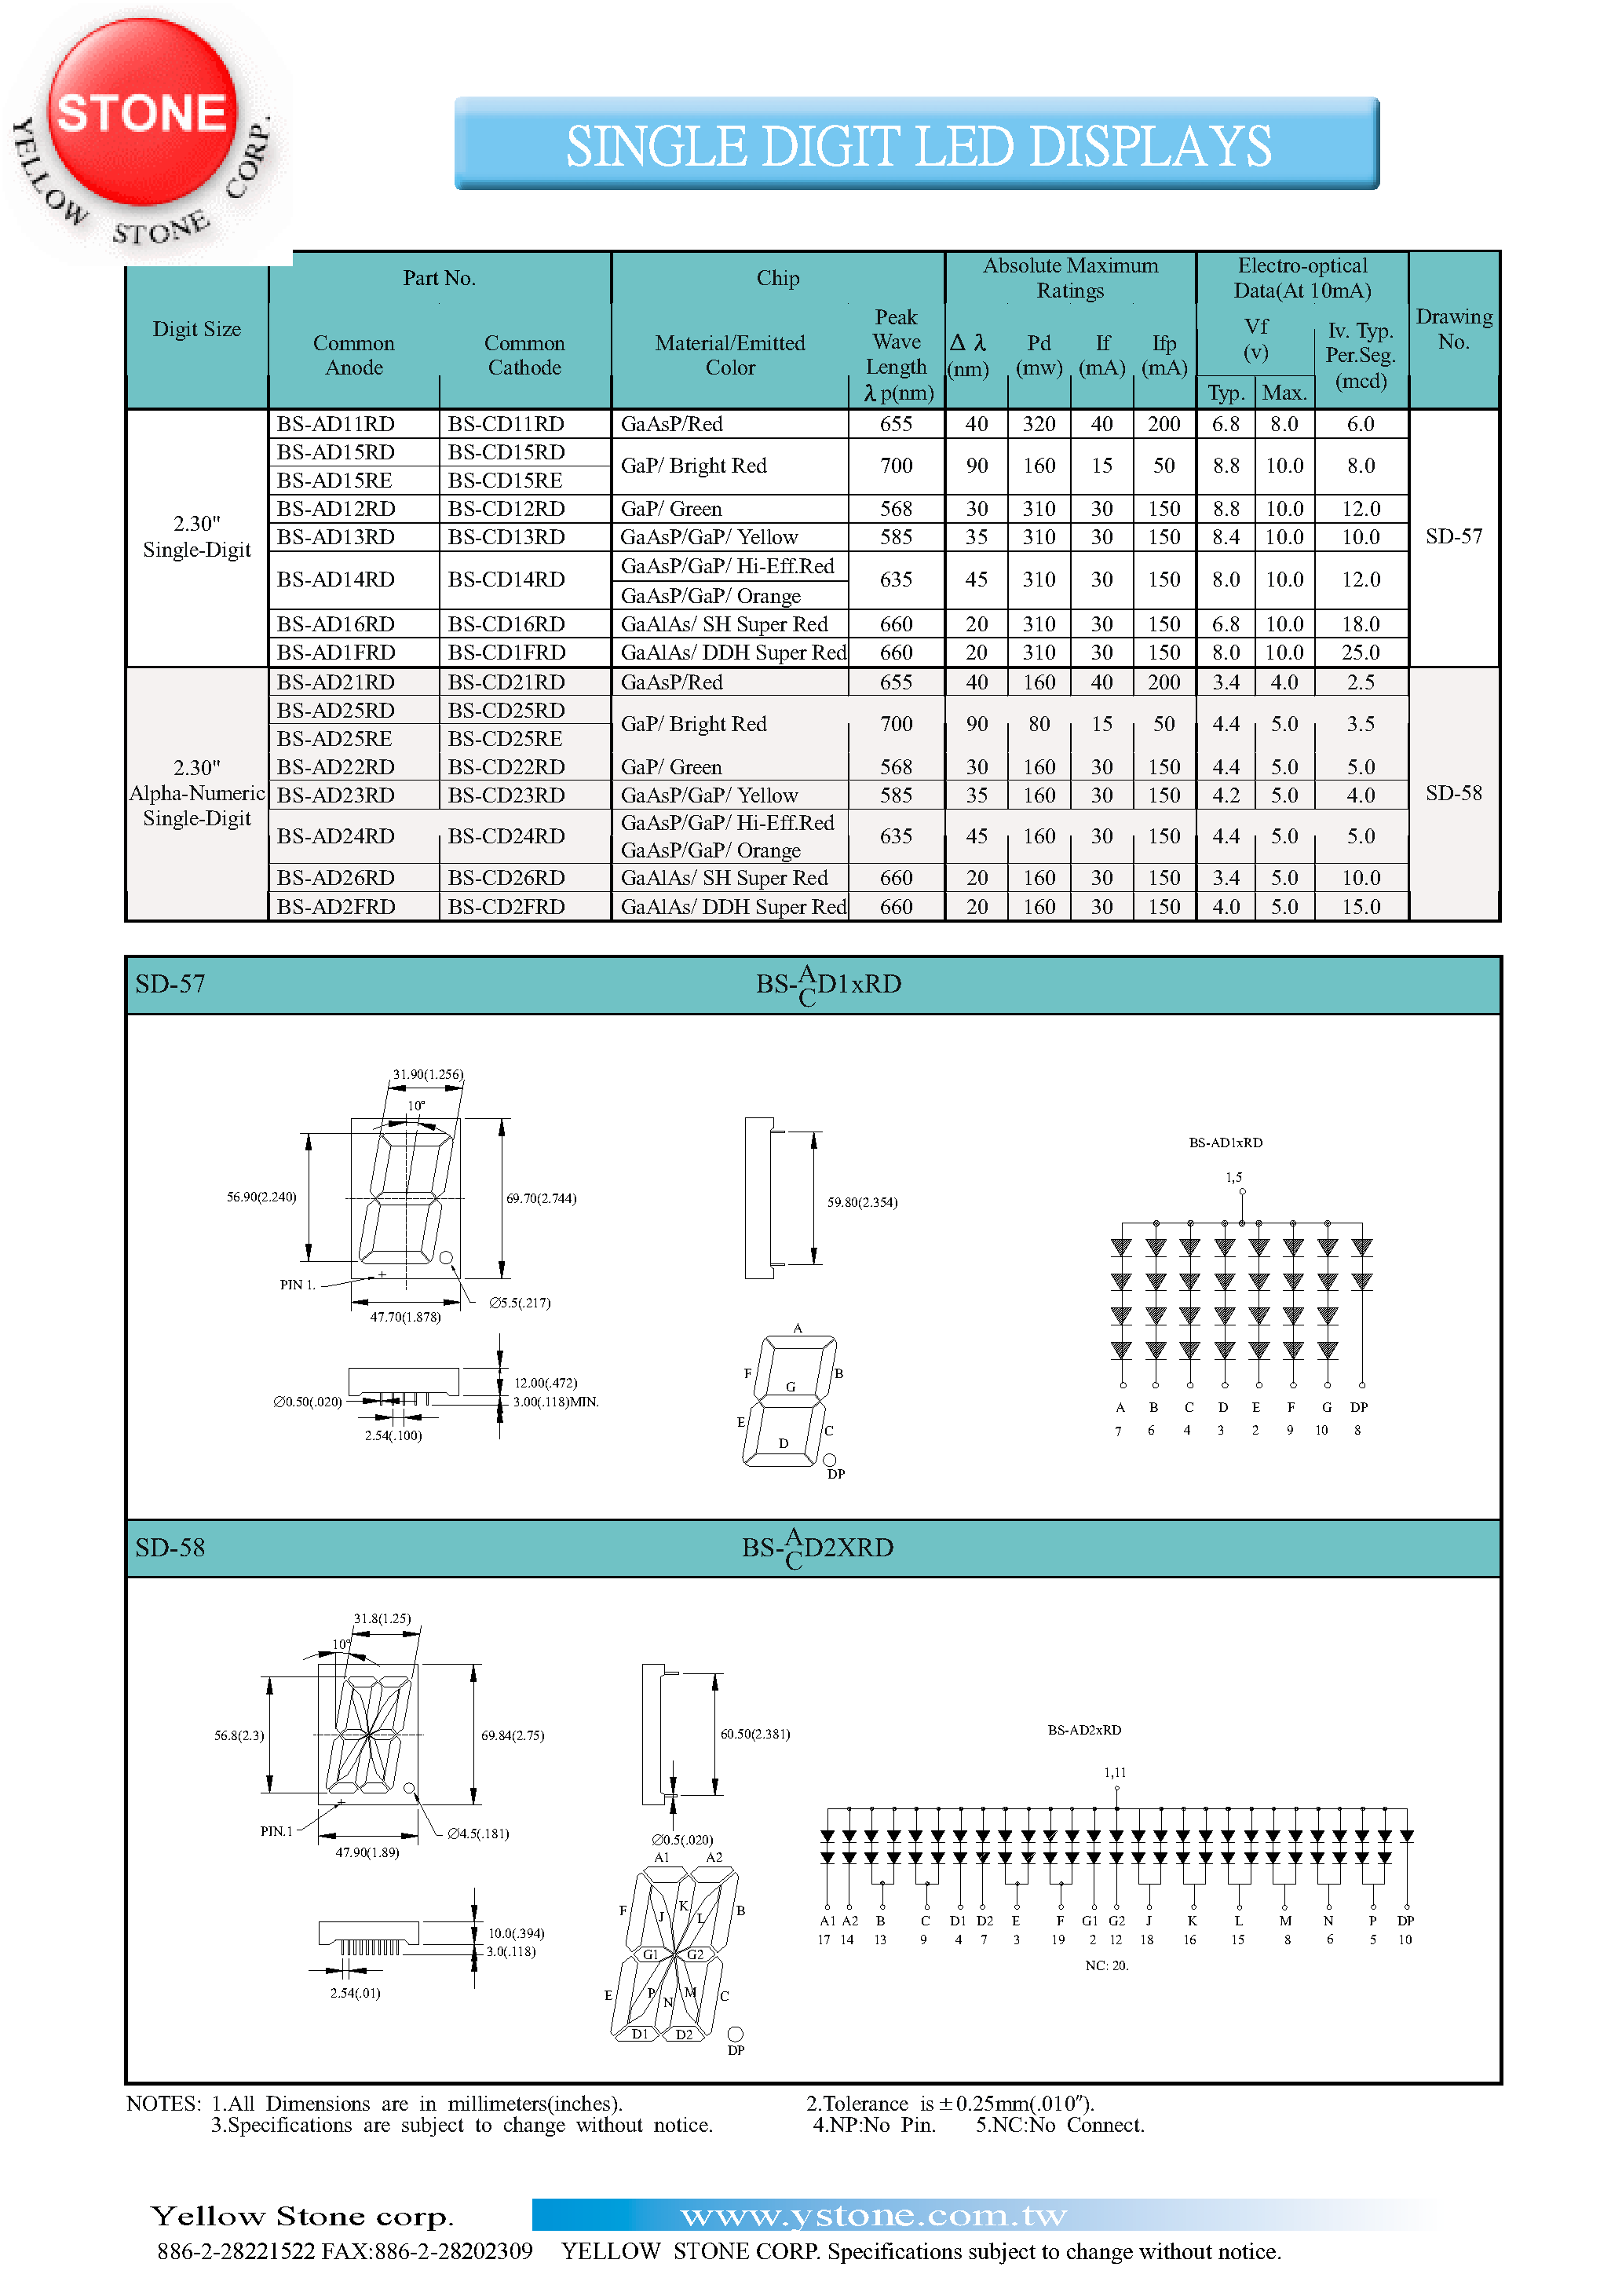 Datasheet BS-AD22RD - SINGLE DIGIT LED DISPLAYS page 1